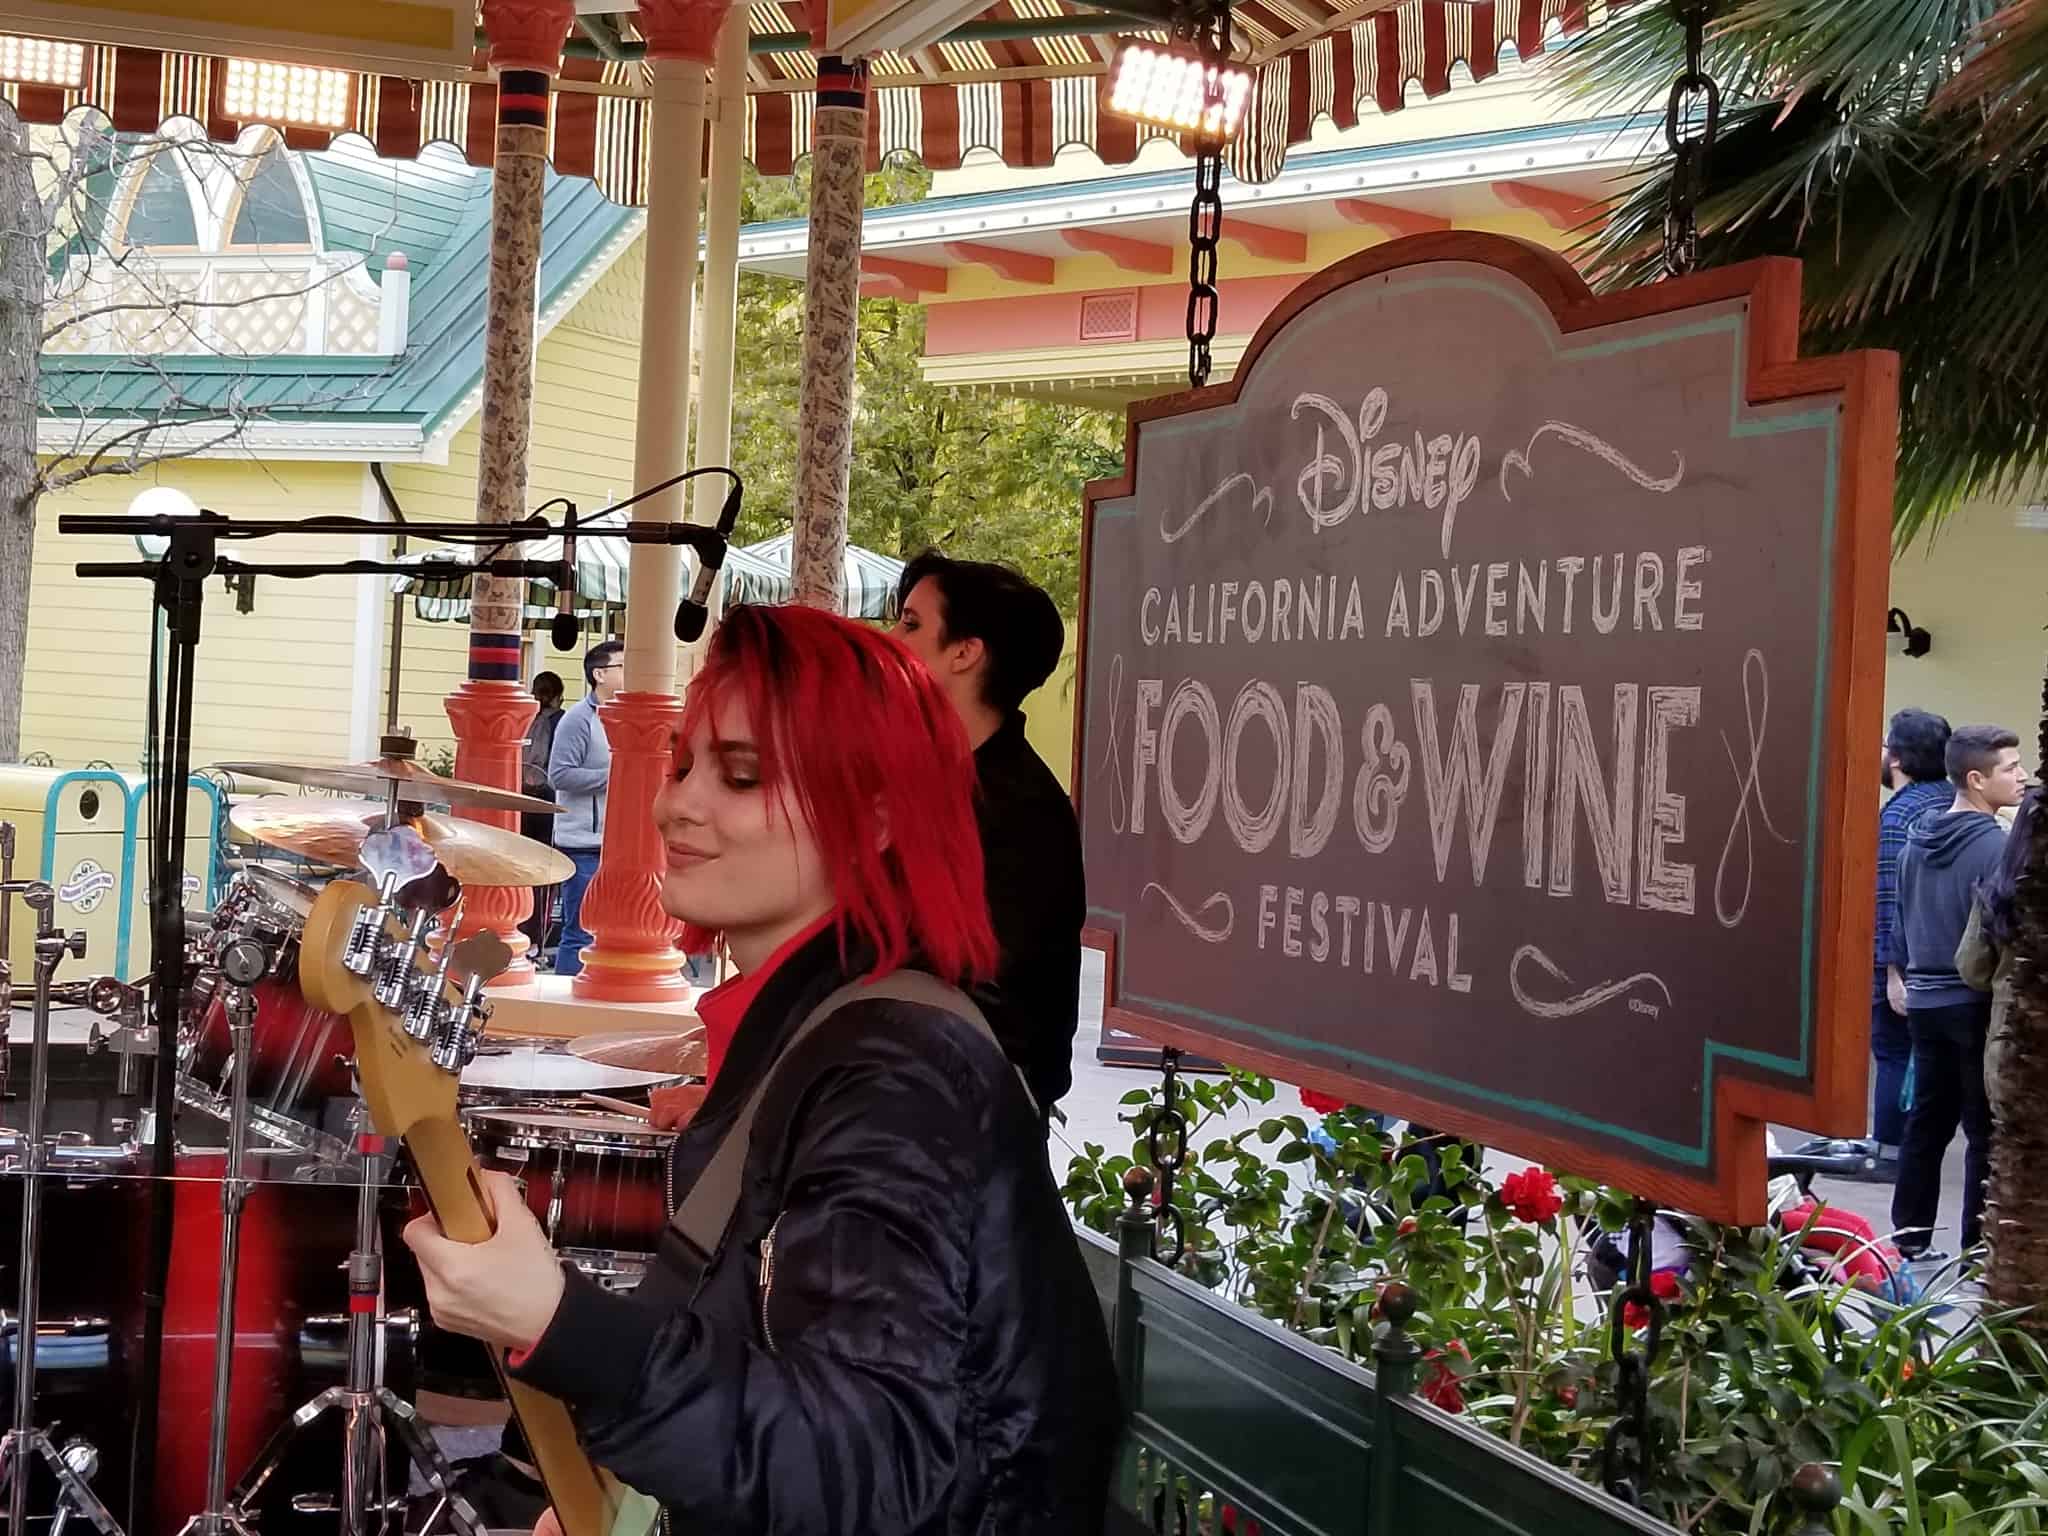 Disneyland Resort Disney California Adventure Food & Wine Festival 2019 live music entertainment